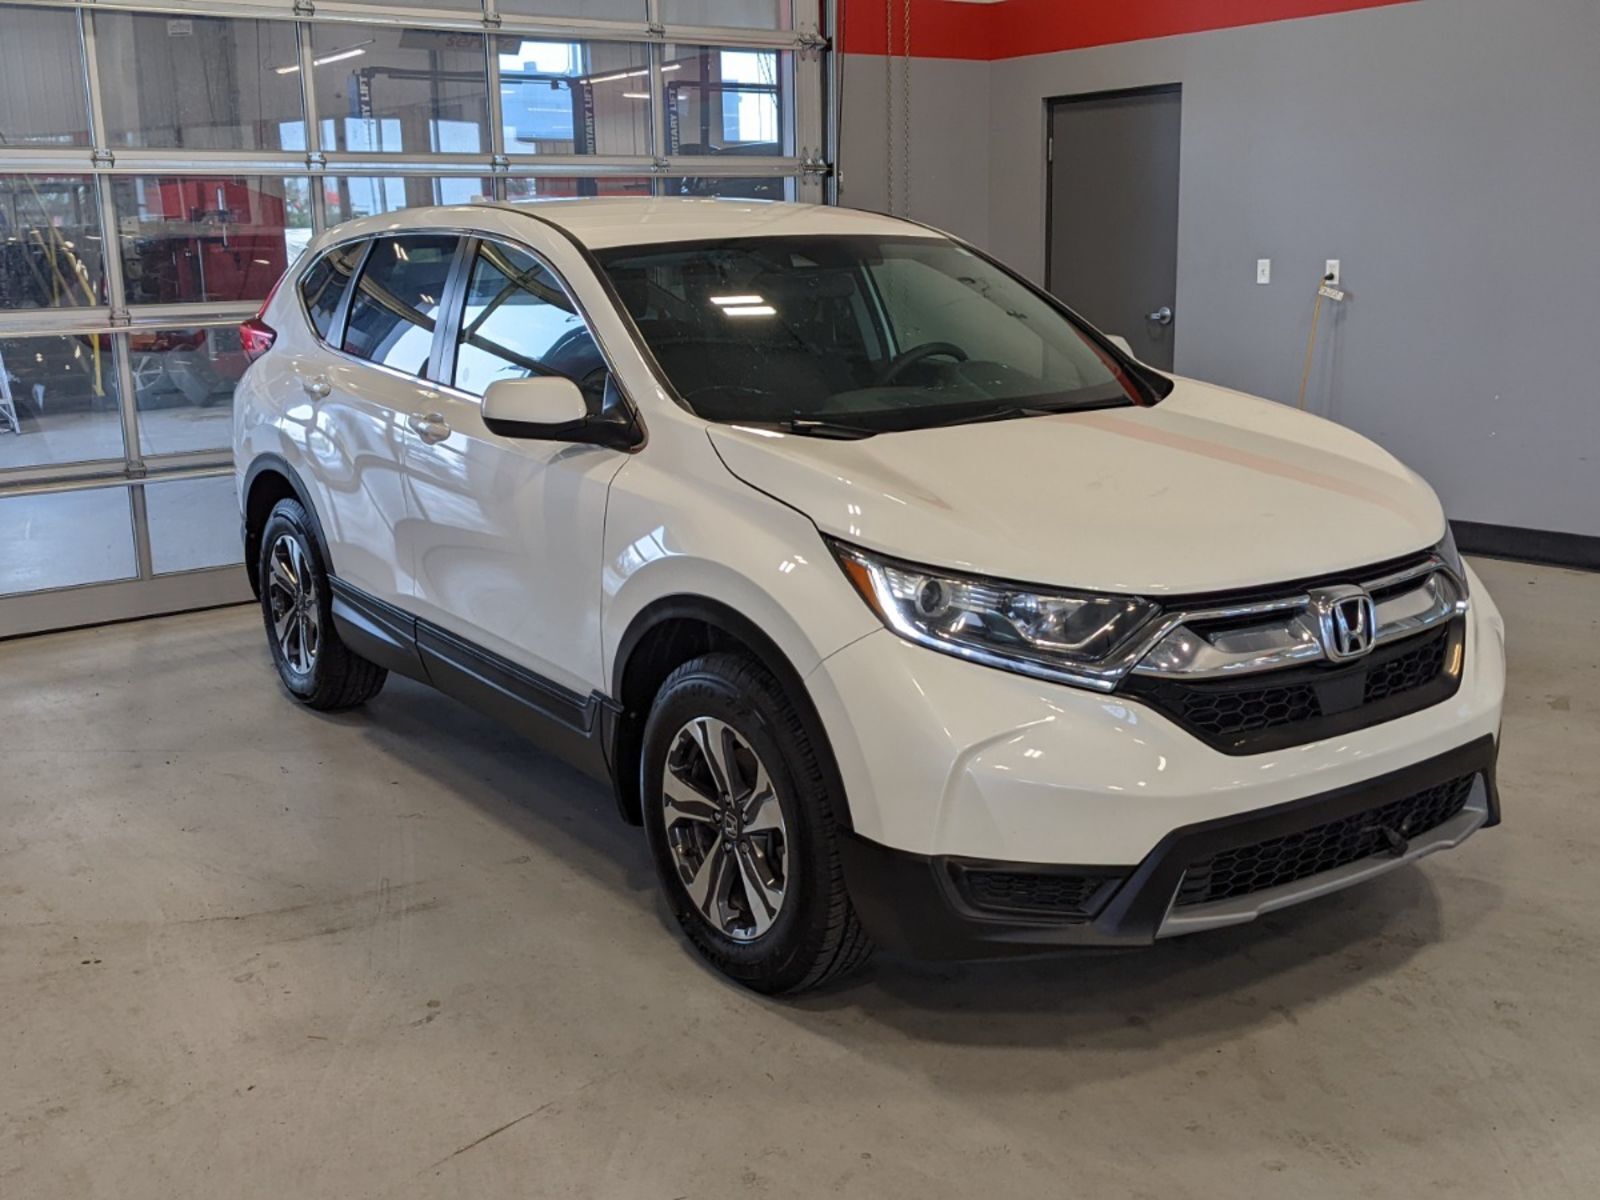 2018 Honda CR-V LX - AWD, Heated seats, Bluetooth, A/C